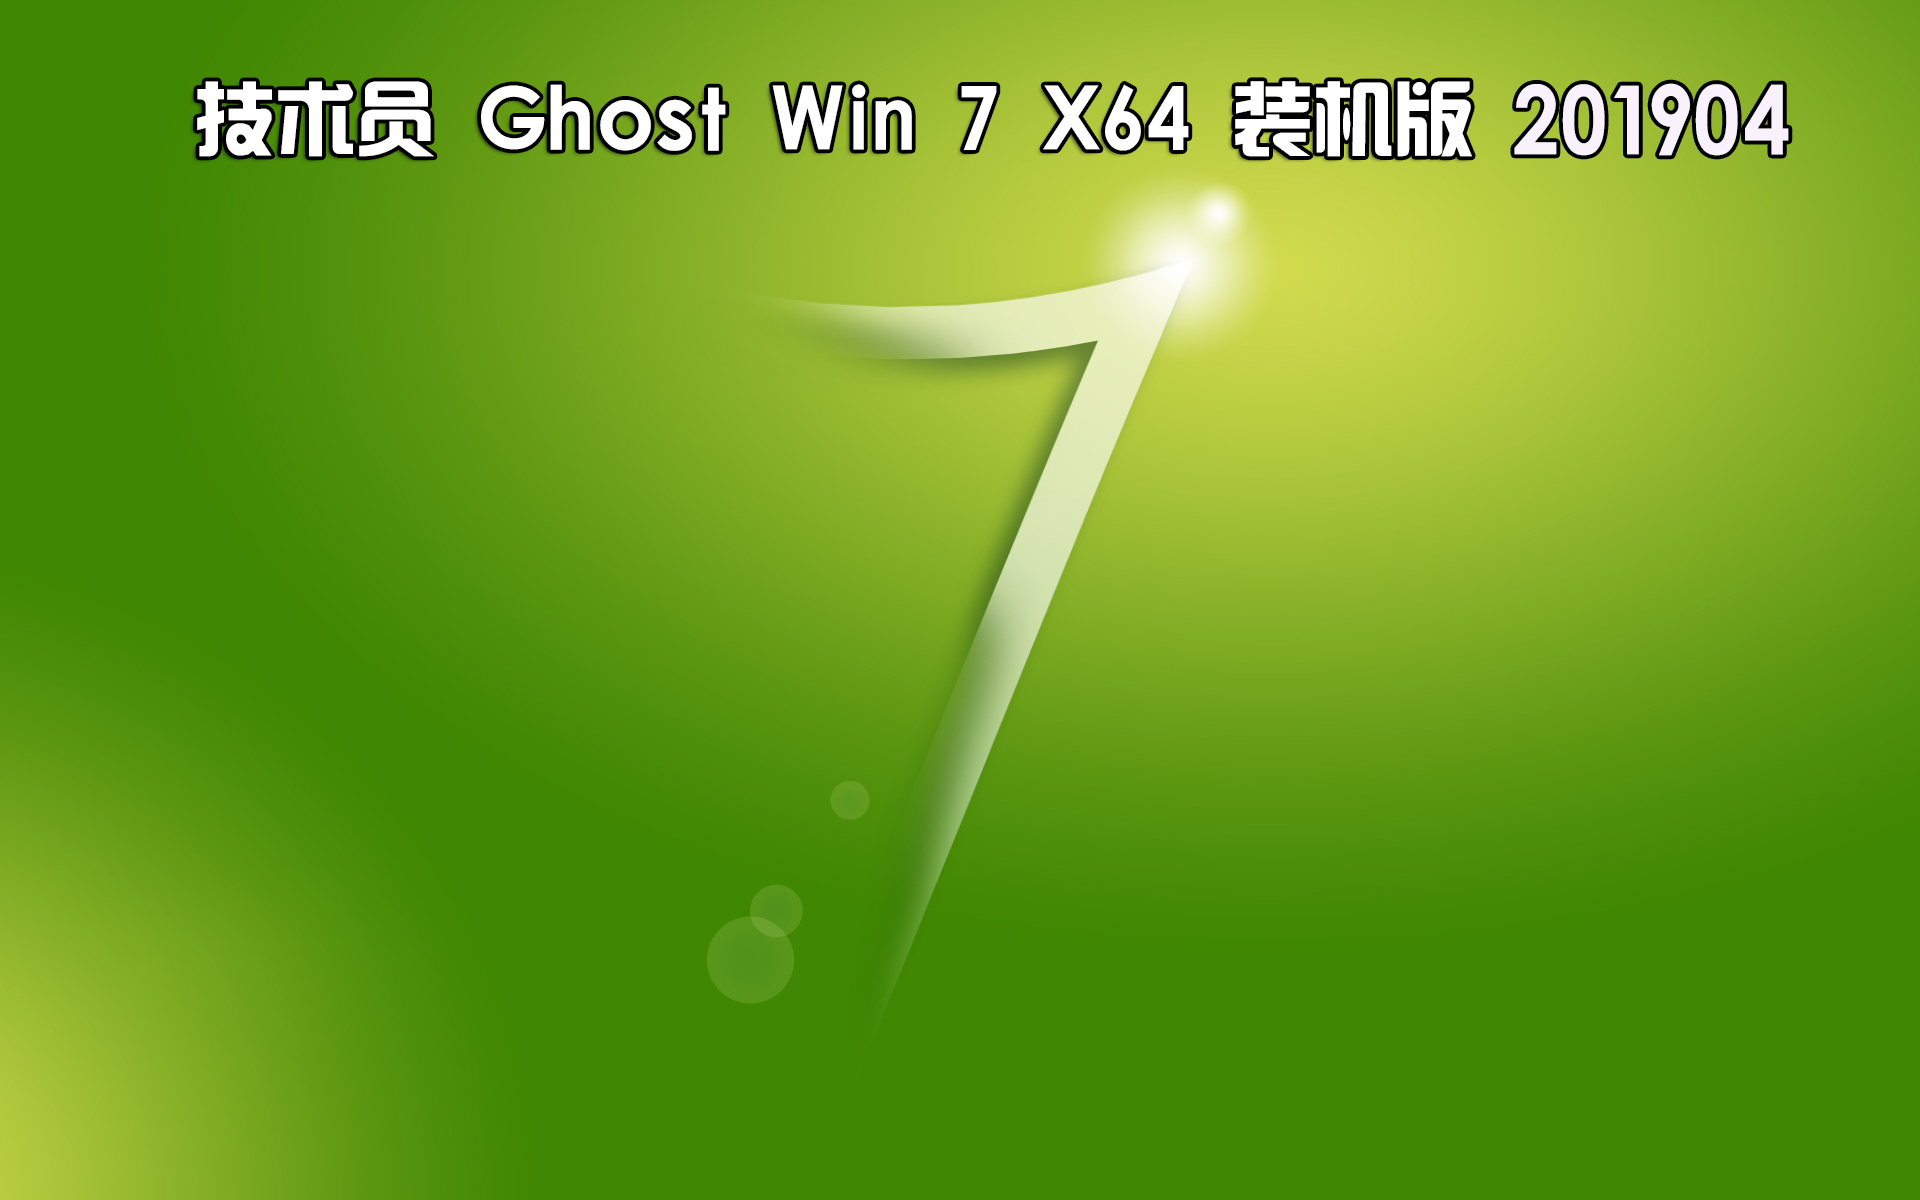 技术员联盟 Ghost Win7 Sp1 x64 装